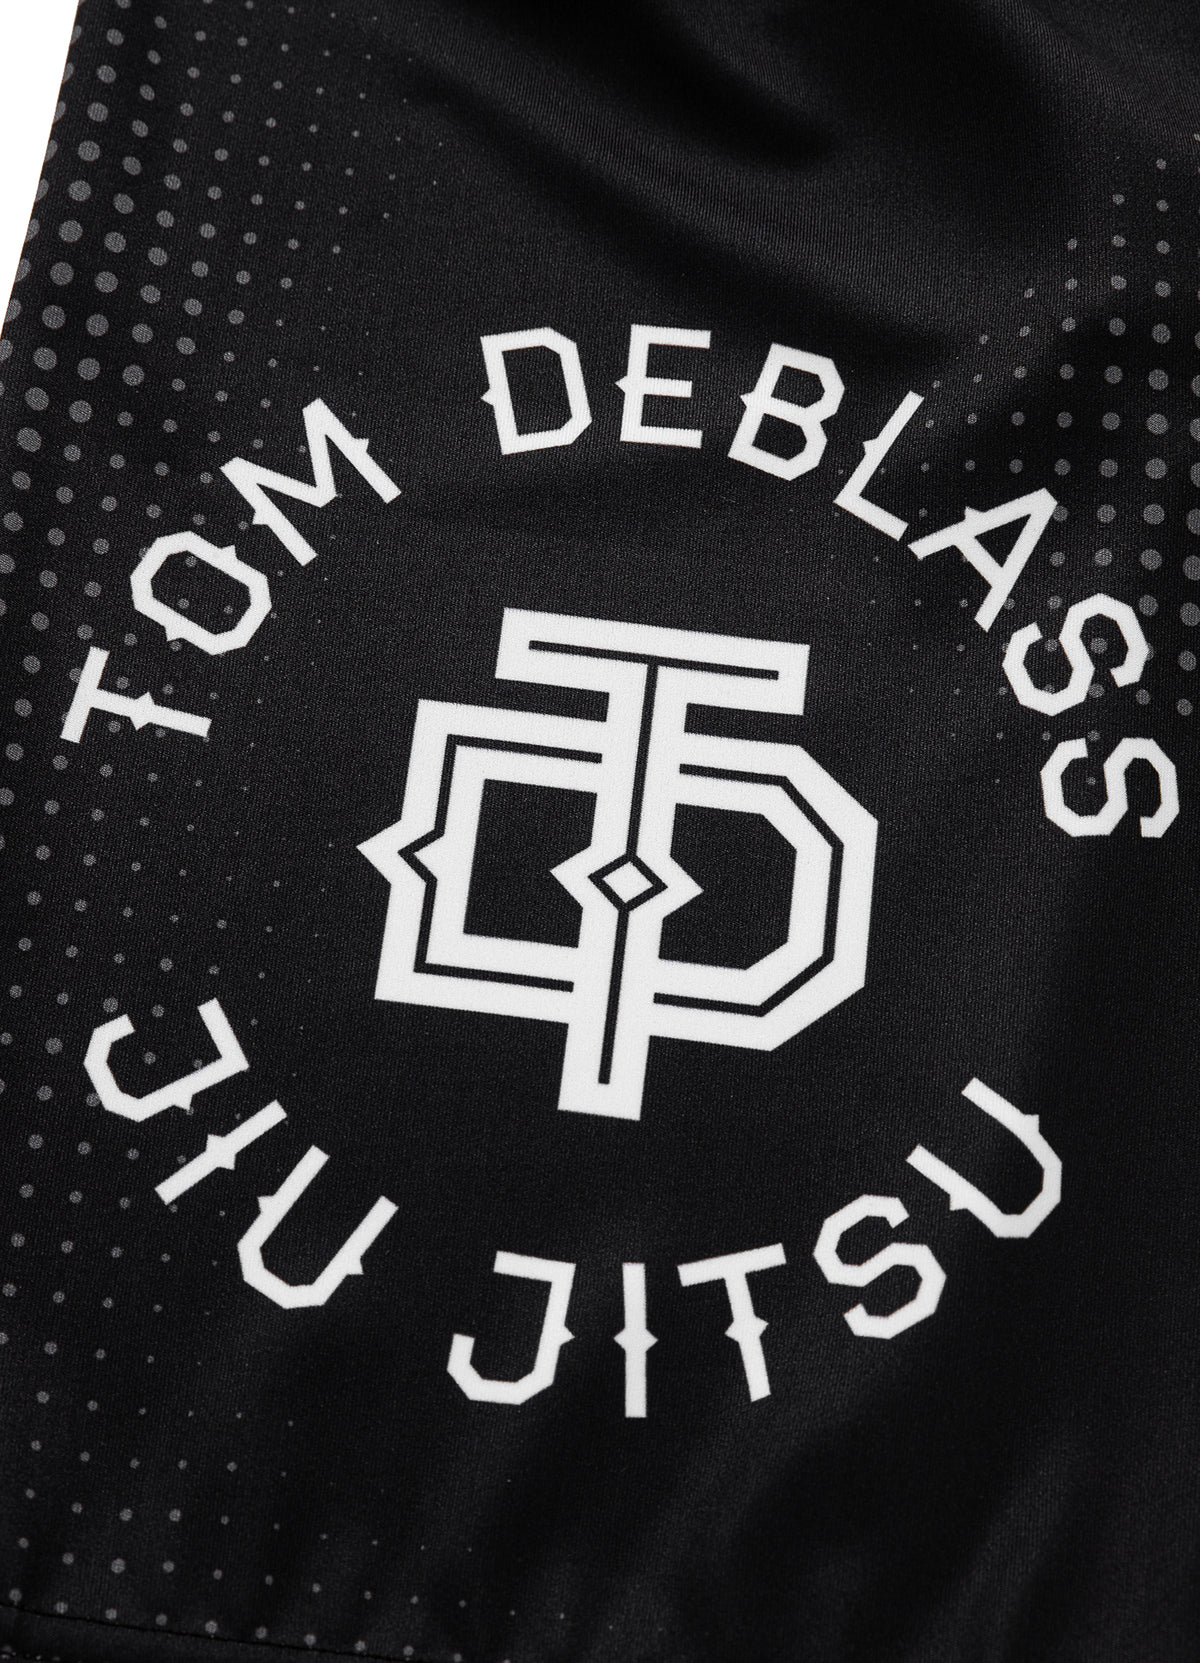 TOM DEBLASS DOT Black Compression Shorts.